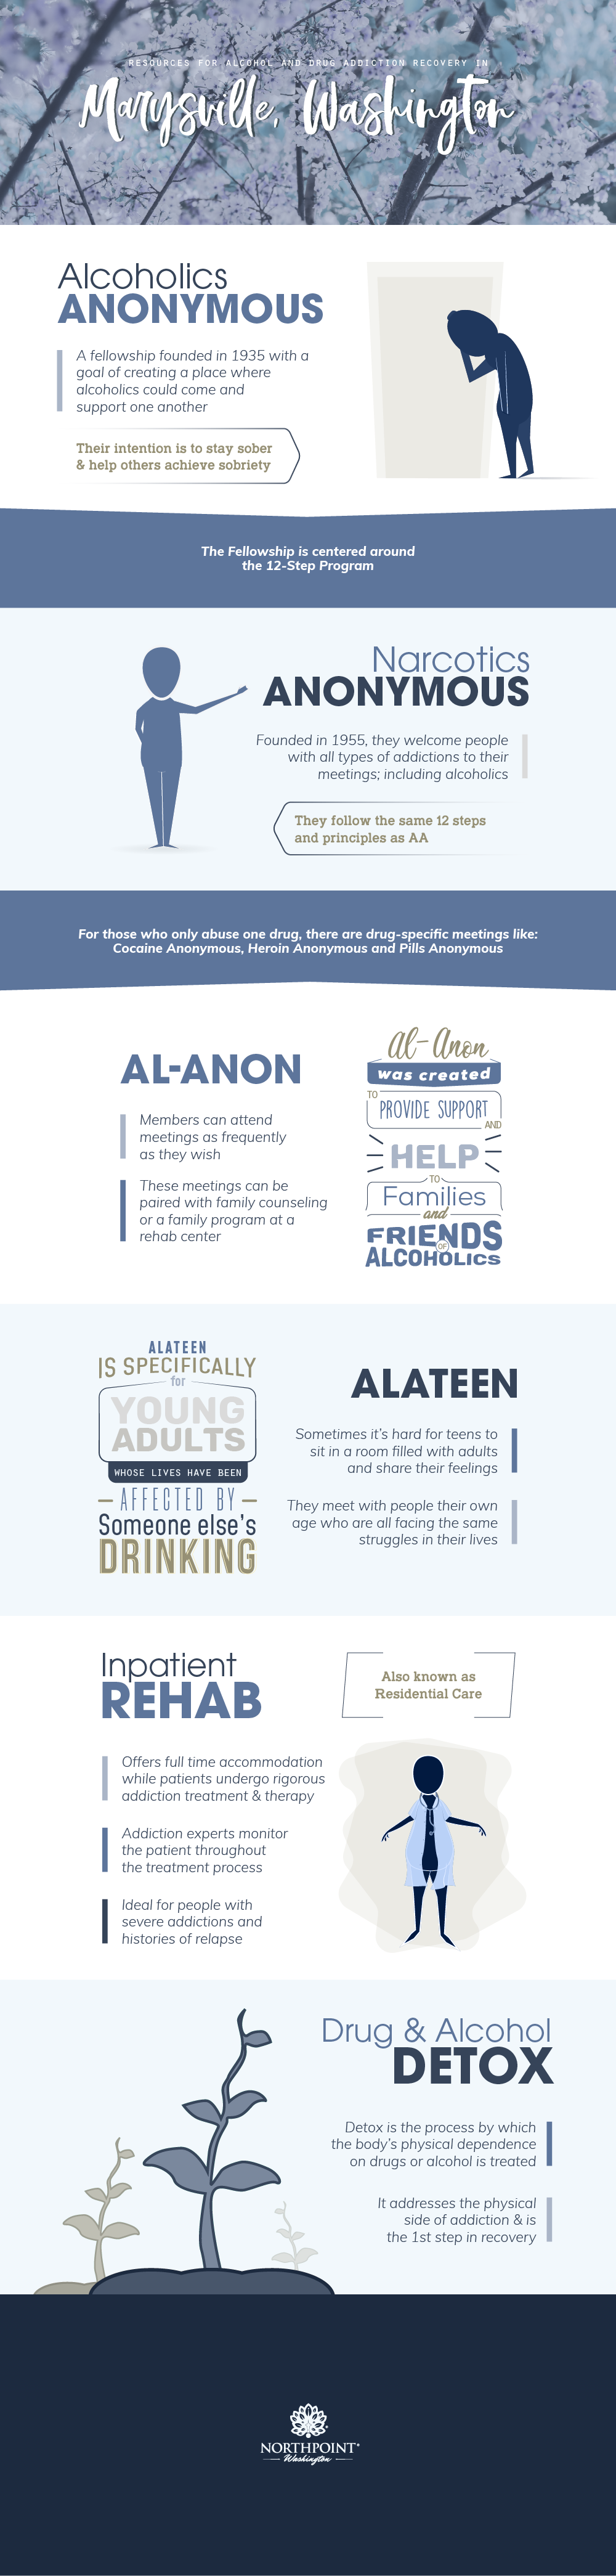 Marysville, WA Drug and Alcohol Addiction Resources Infographic